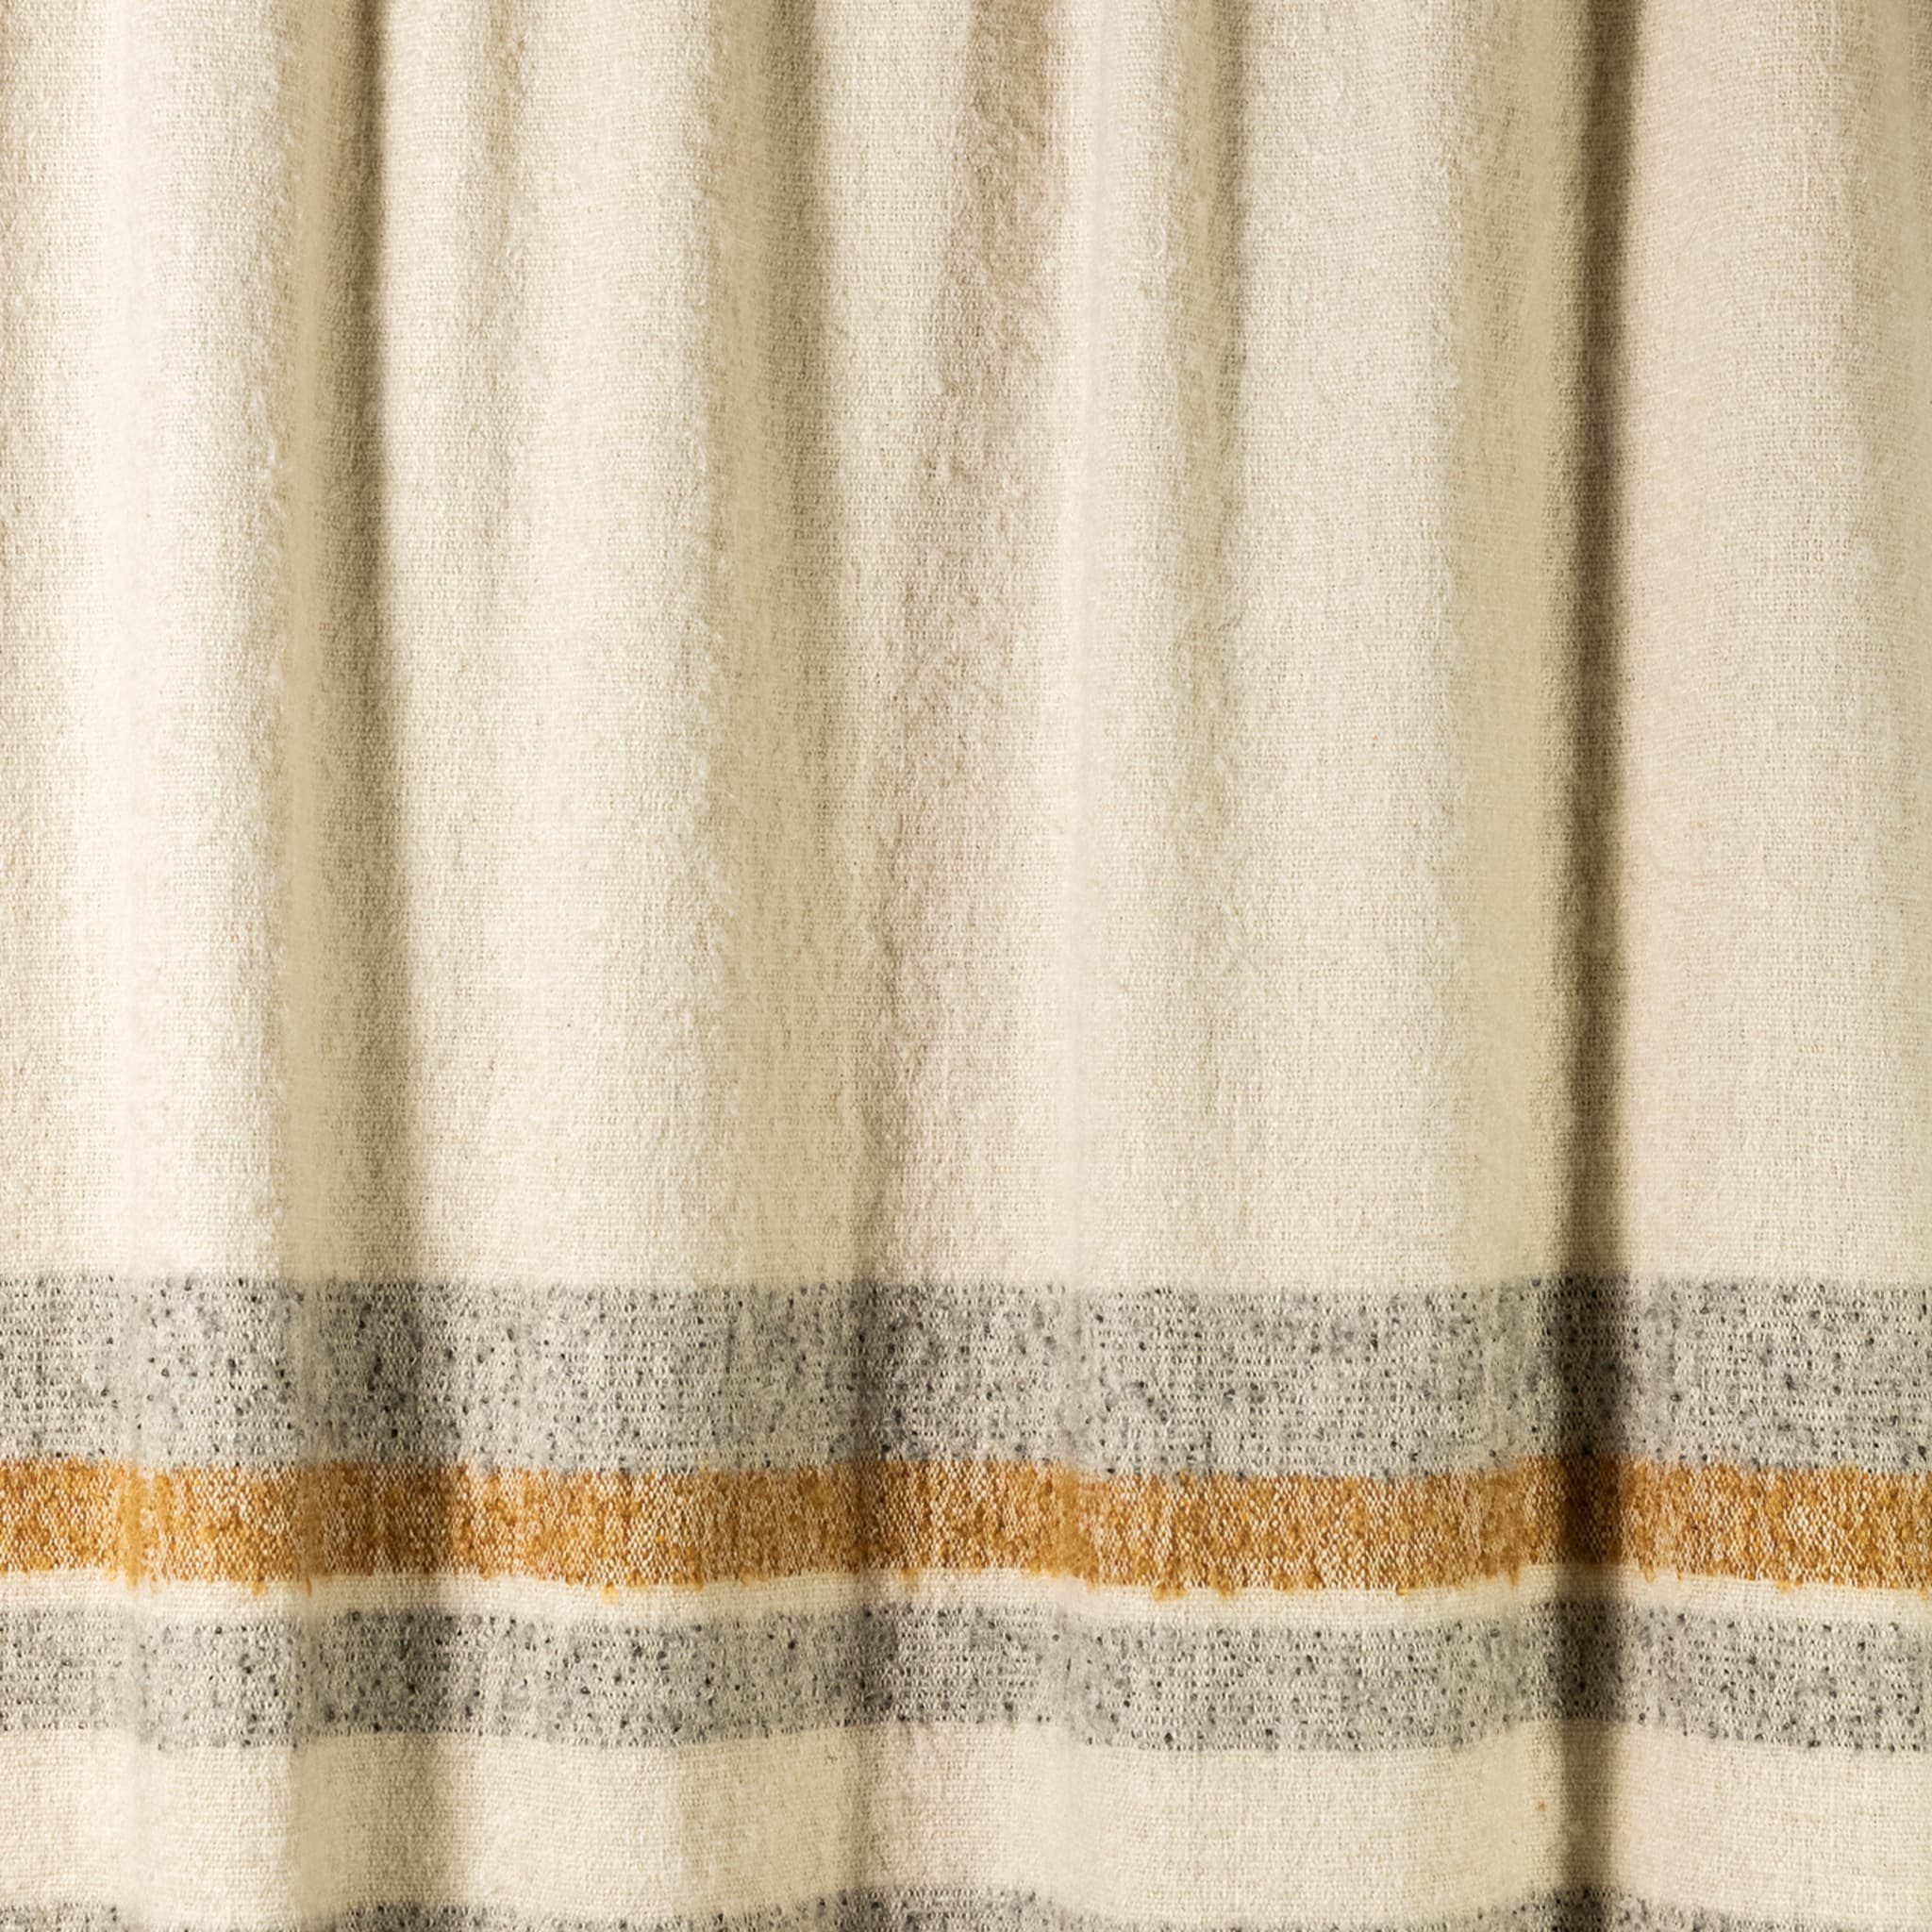 Solitudine Fringed Striped Neutral-Toned Blanket - Alternative view 2